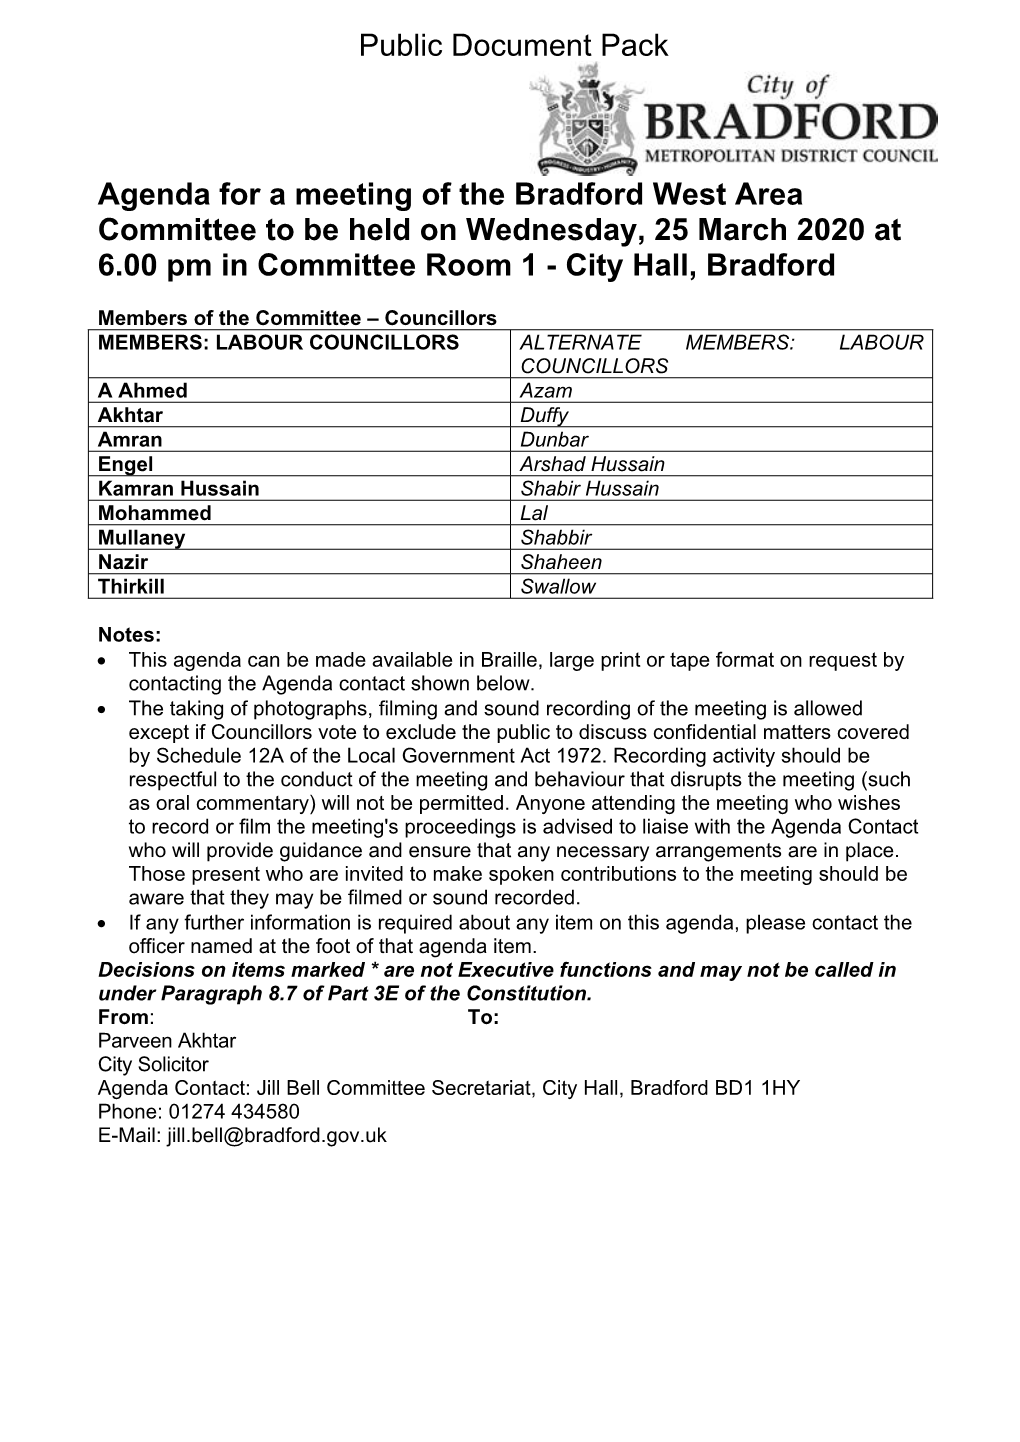 Agenda Document for Bradford West Area Committee, 25/03/2020 18:00